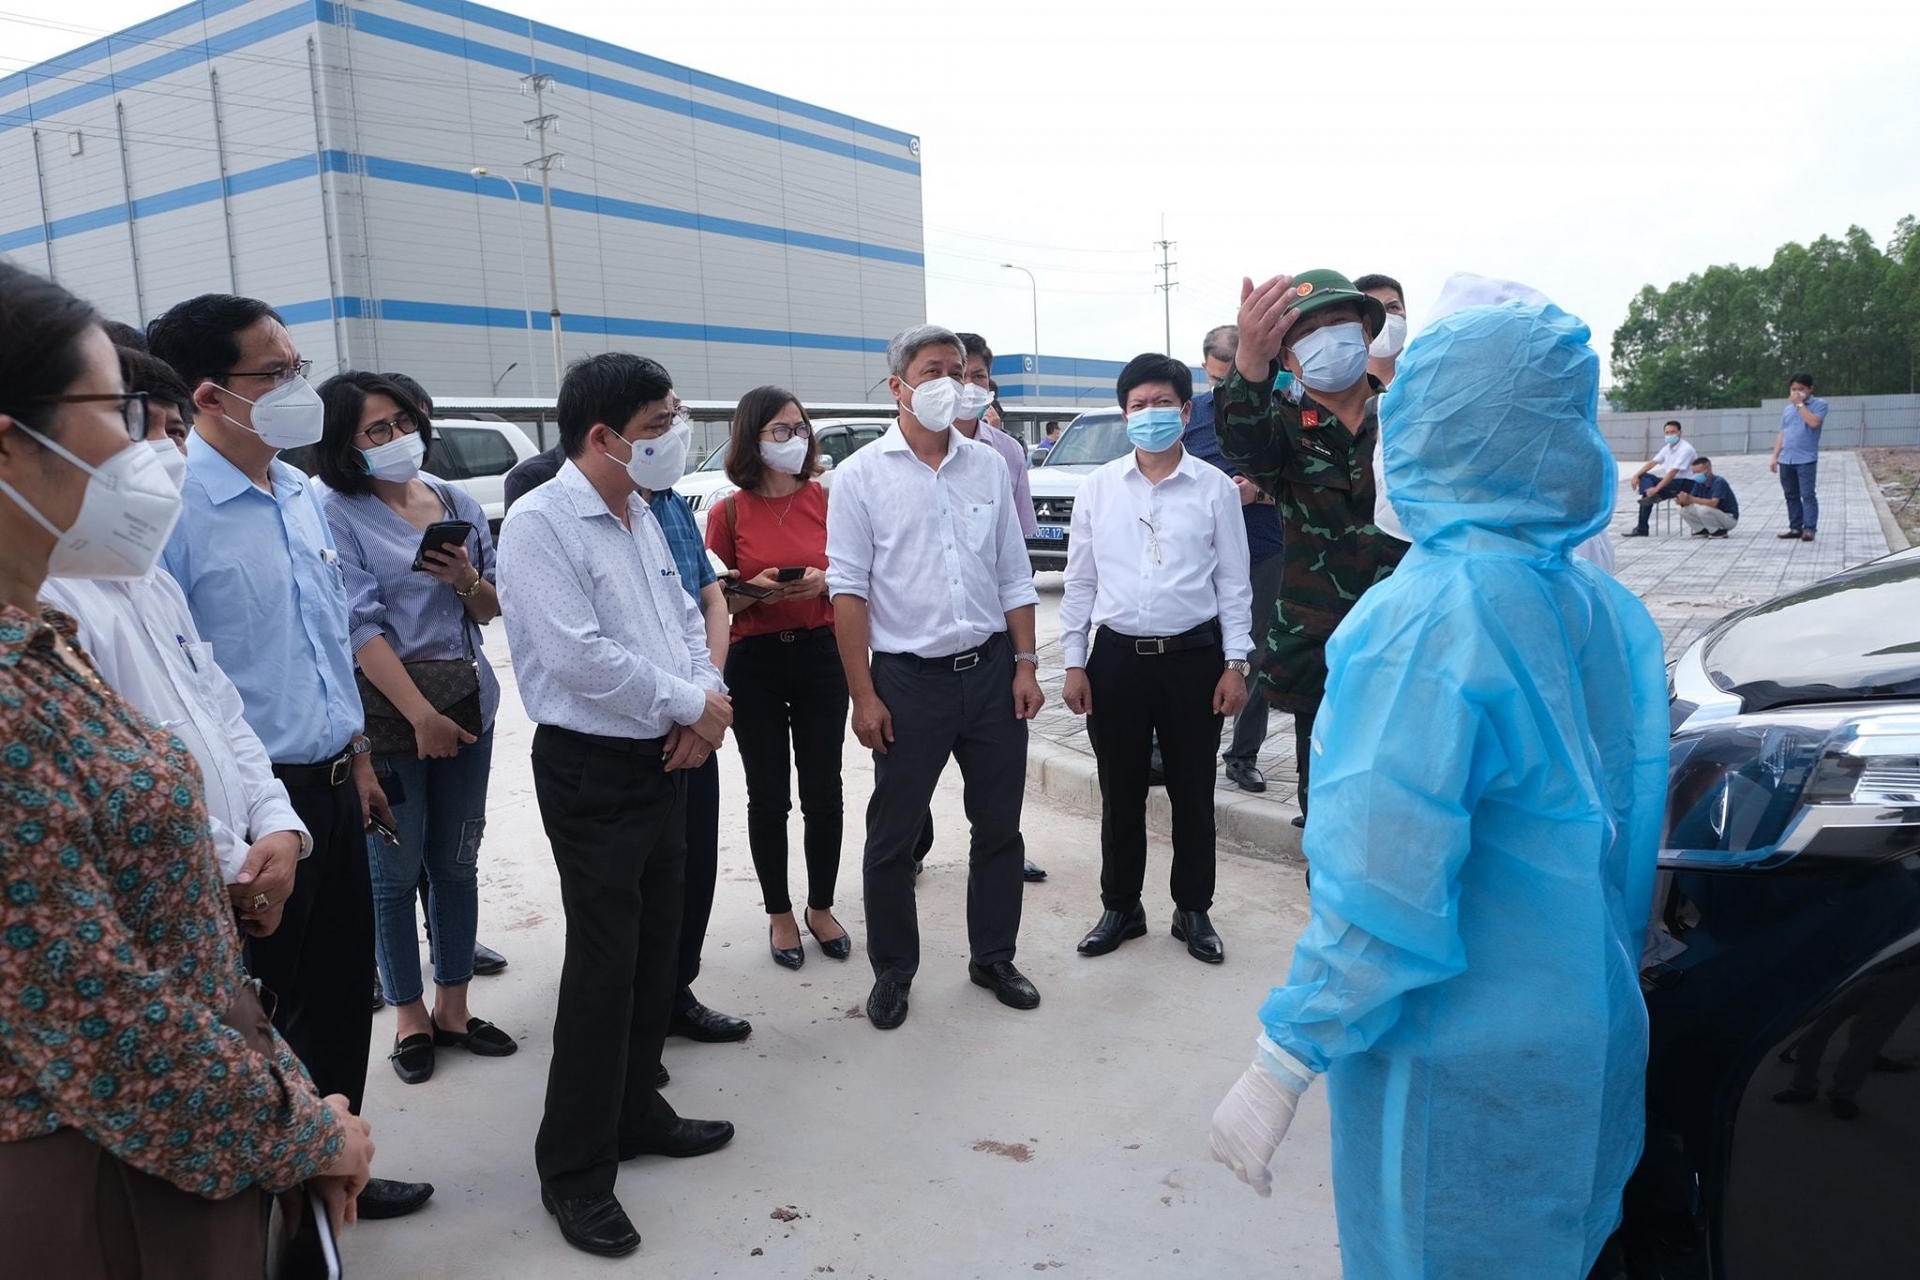 Field hospital to be built in Bac Giang amid coronavirus surge